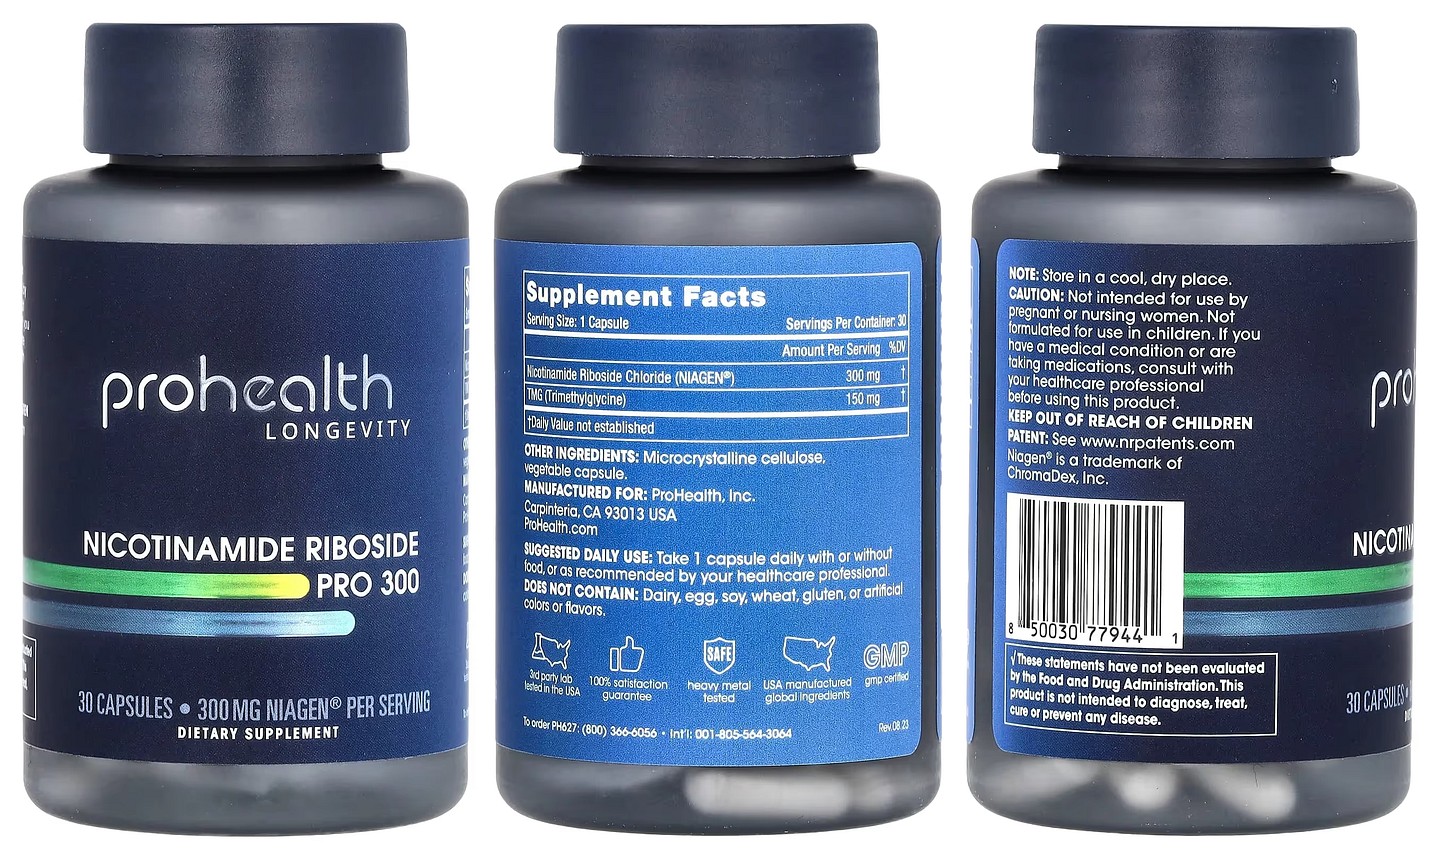 ProHealth Longevity, Nicotinamide Riboside Pro 300 packaging